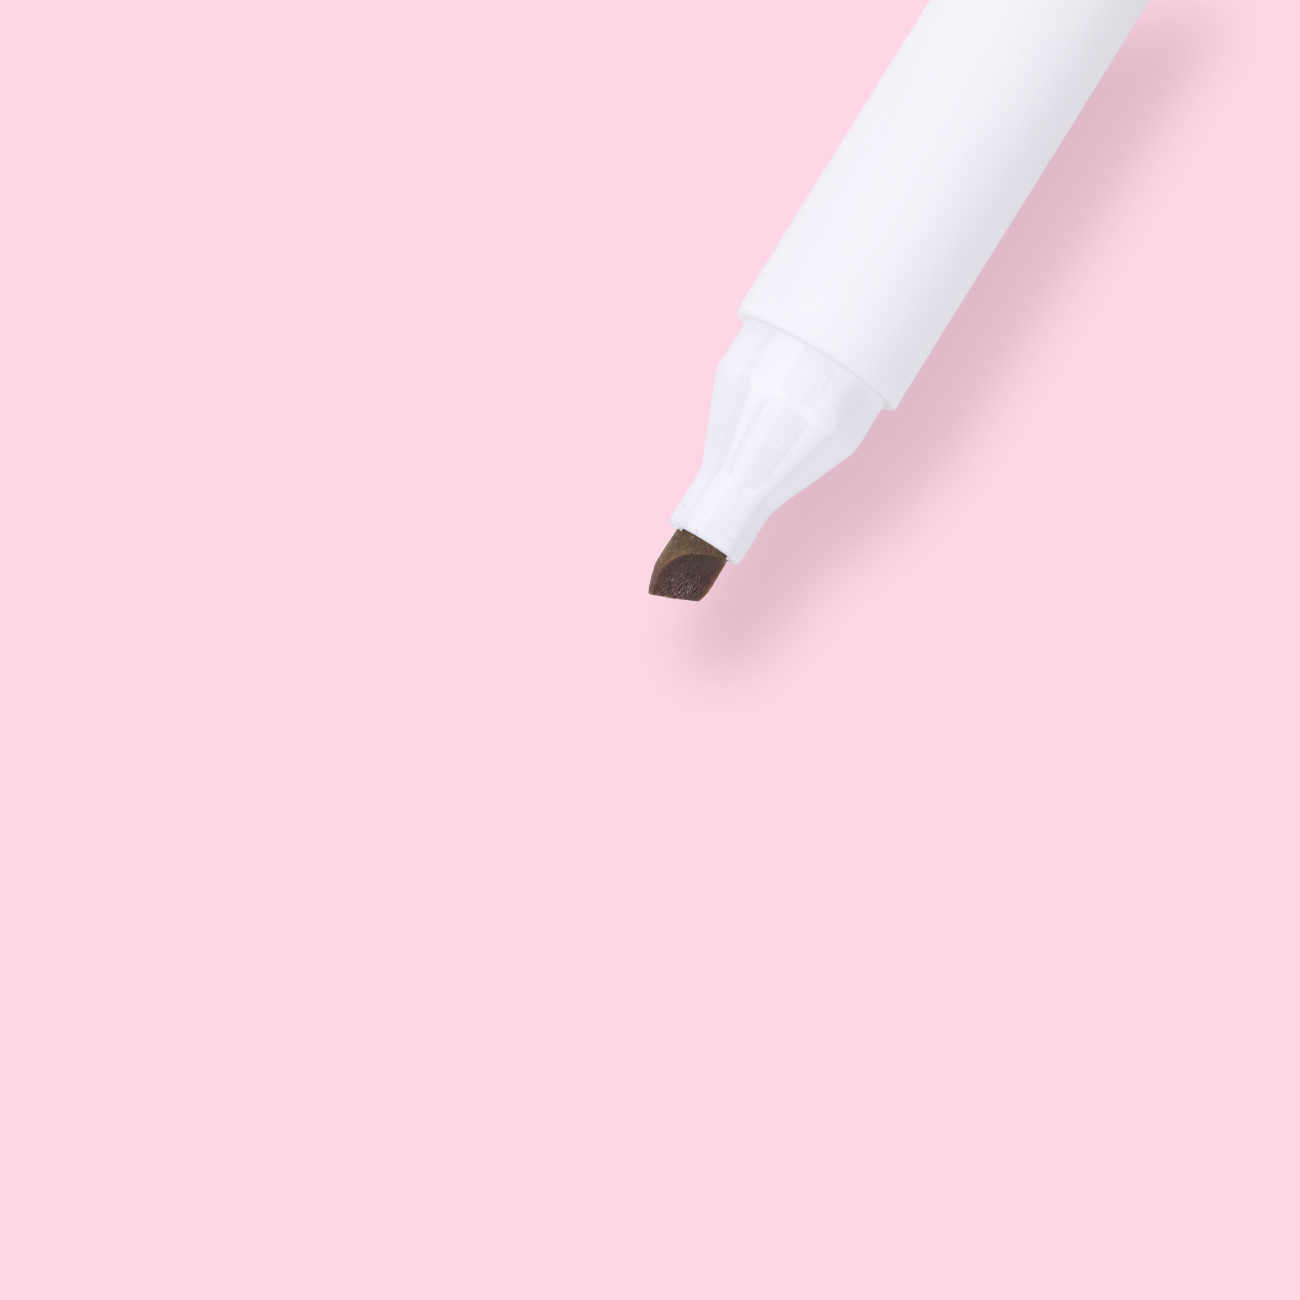 Color Scheme Pen Set - Olive — Stationery Pal